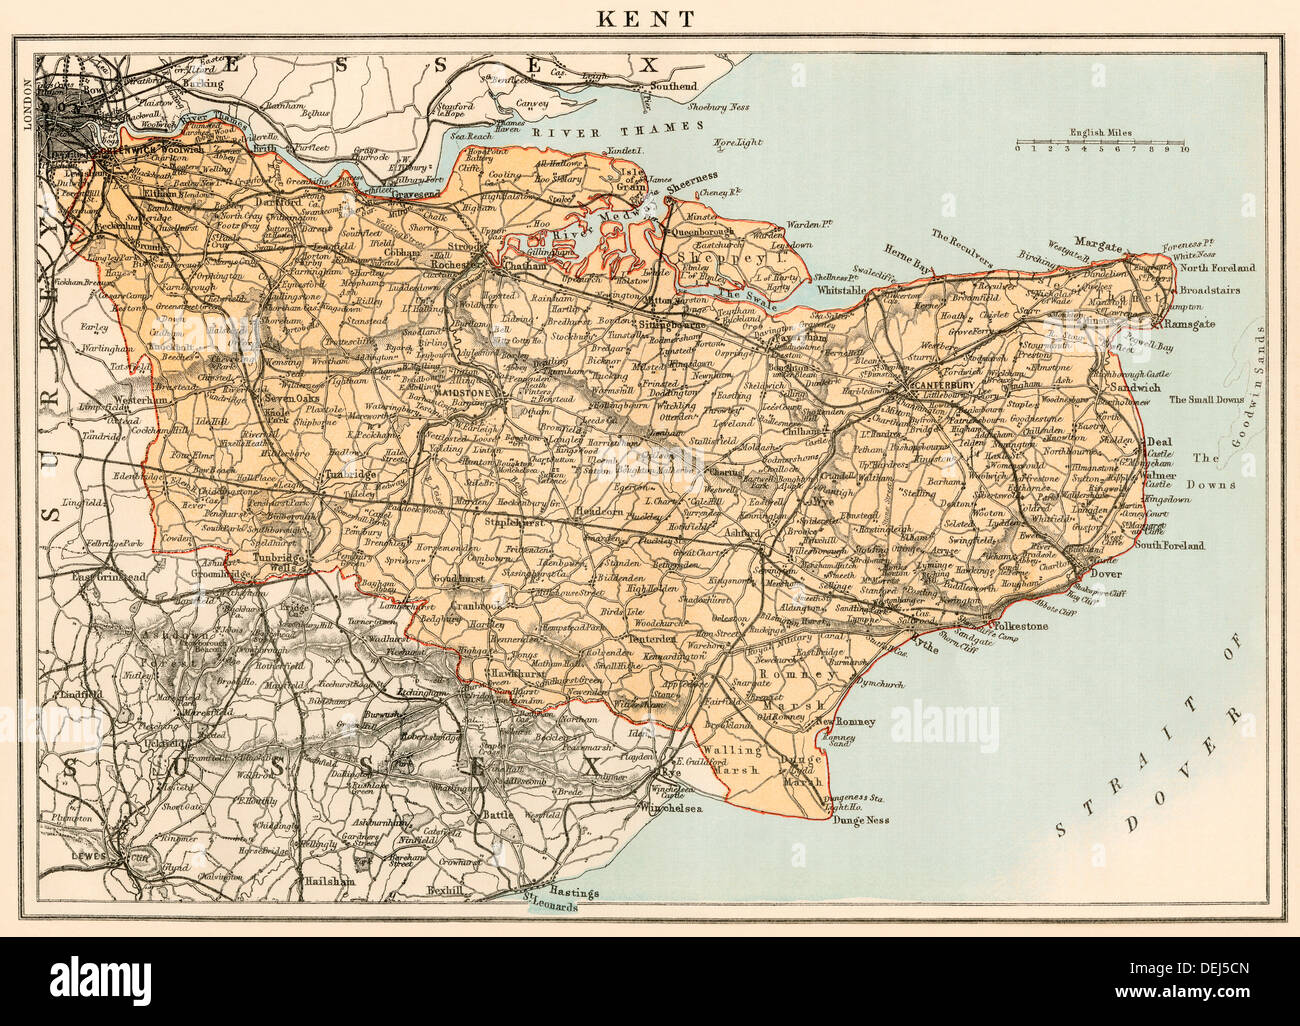 Mappa di Kent, Inghilterra, 1870s. Litografia a colori Foto Stock